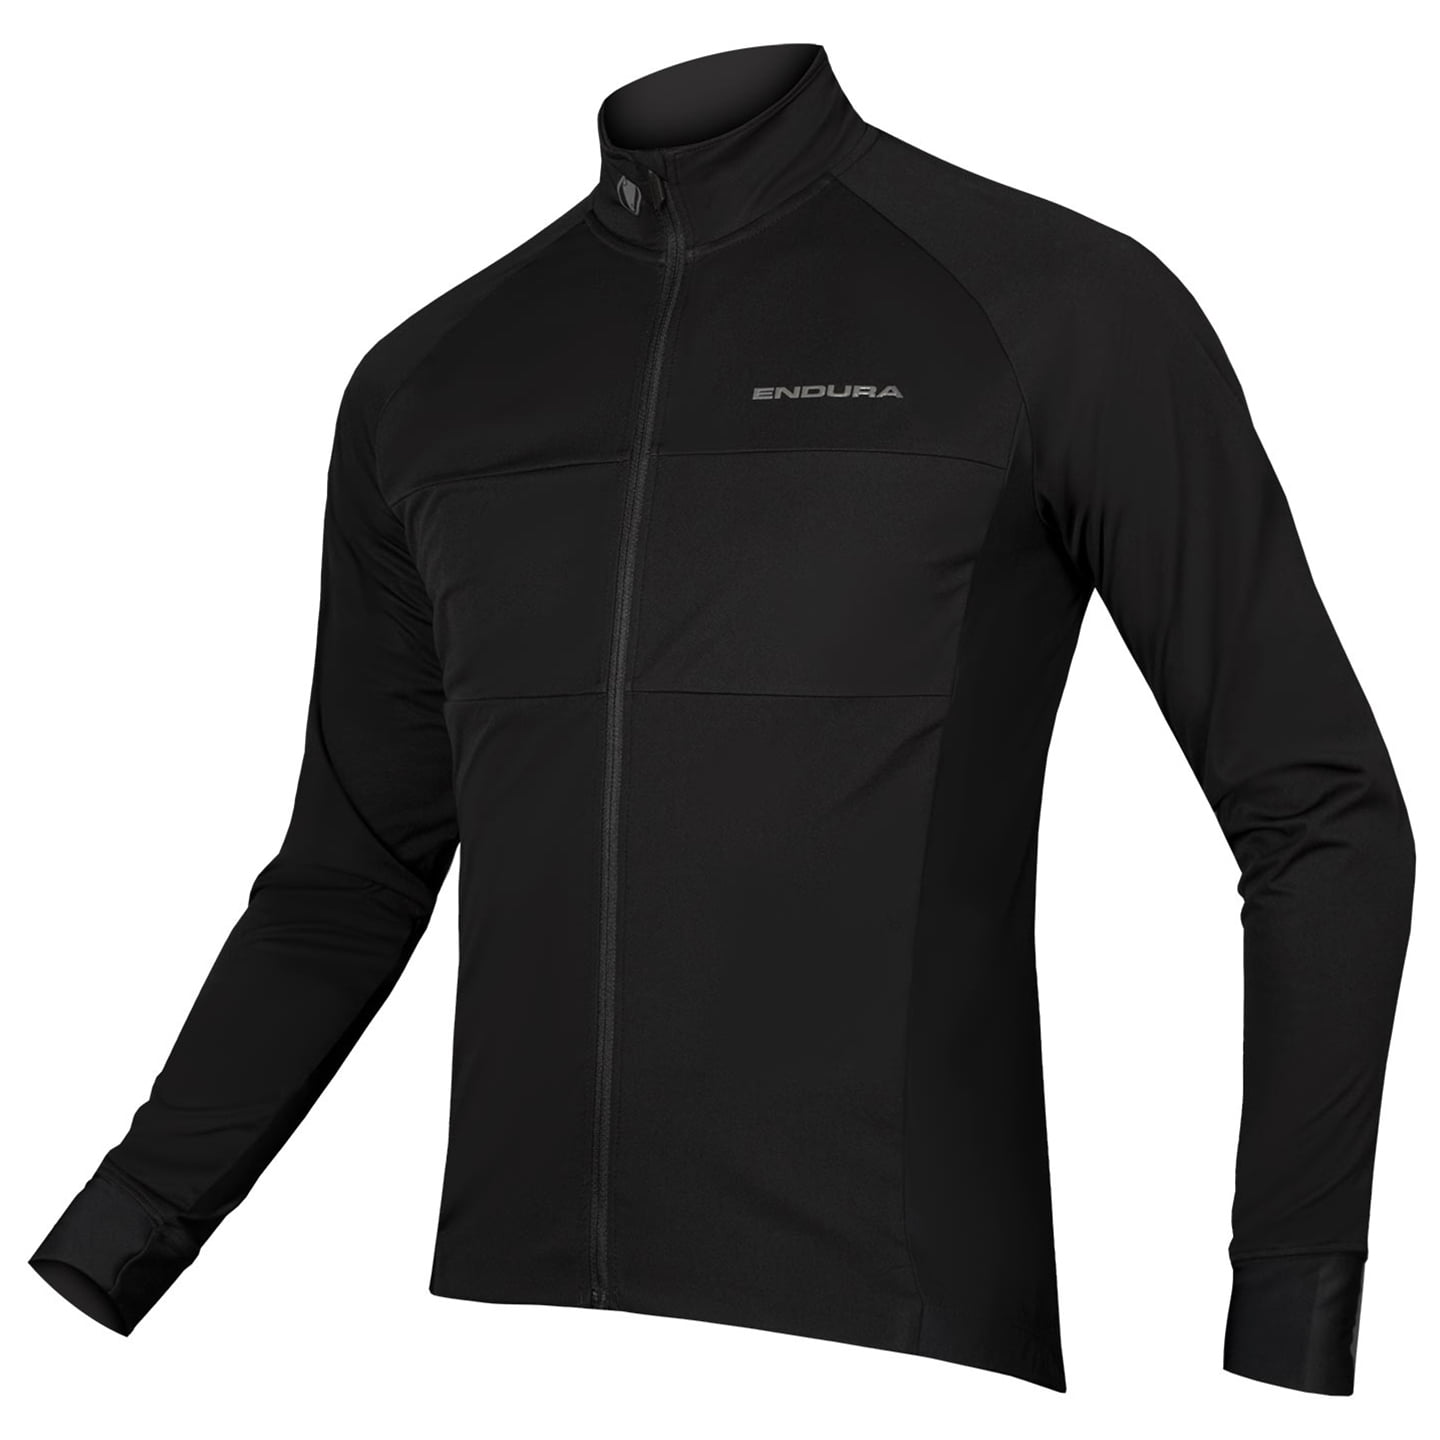 ENDURA FS260-Pro Jetstream Light Jacket, for men, size 2XL, Cycle jacket, Cycling clothing